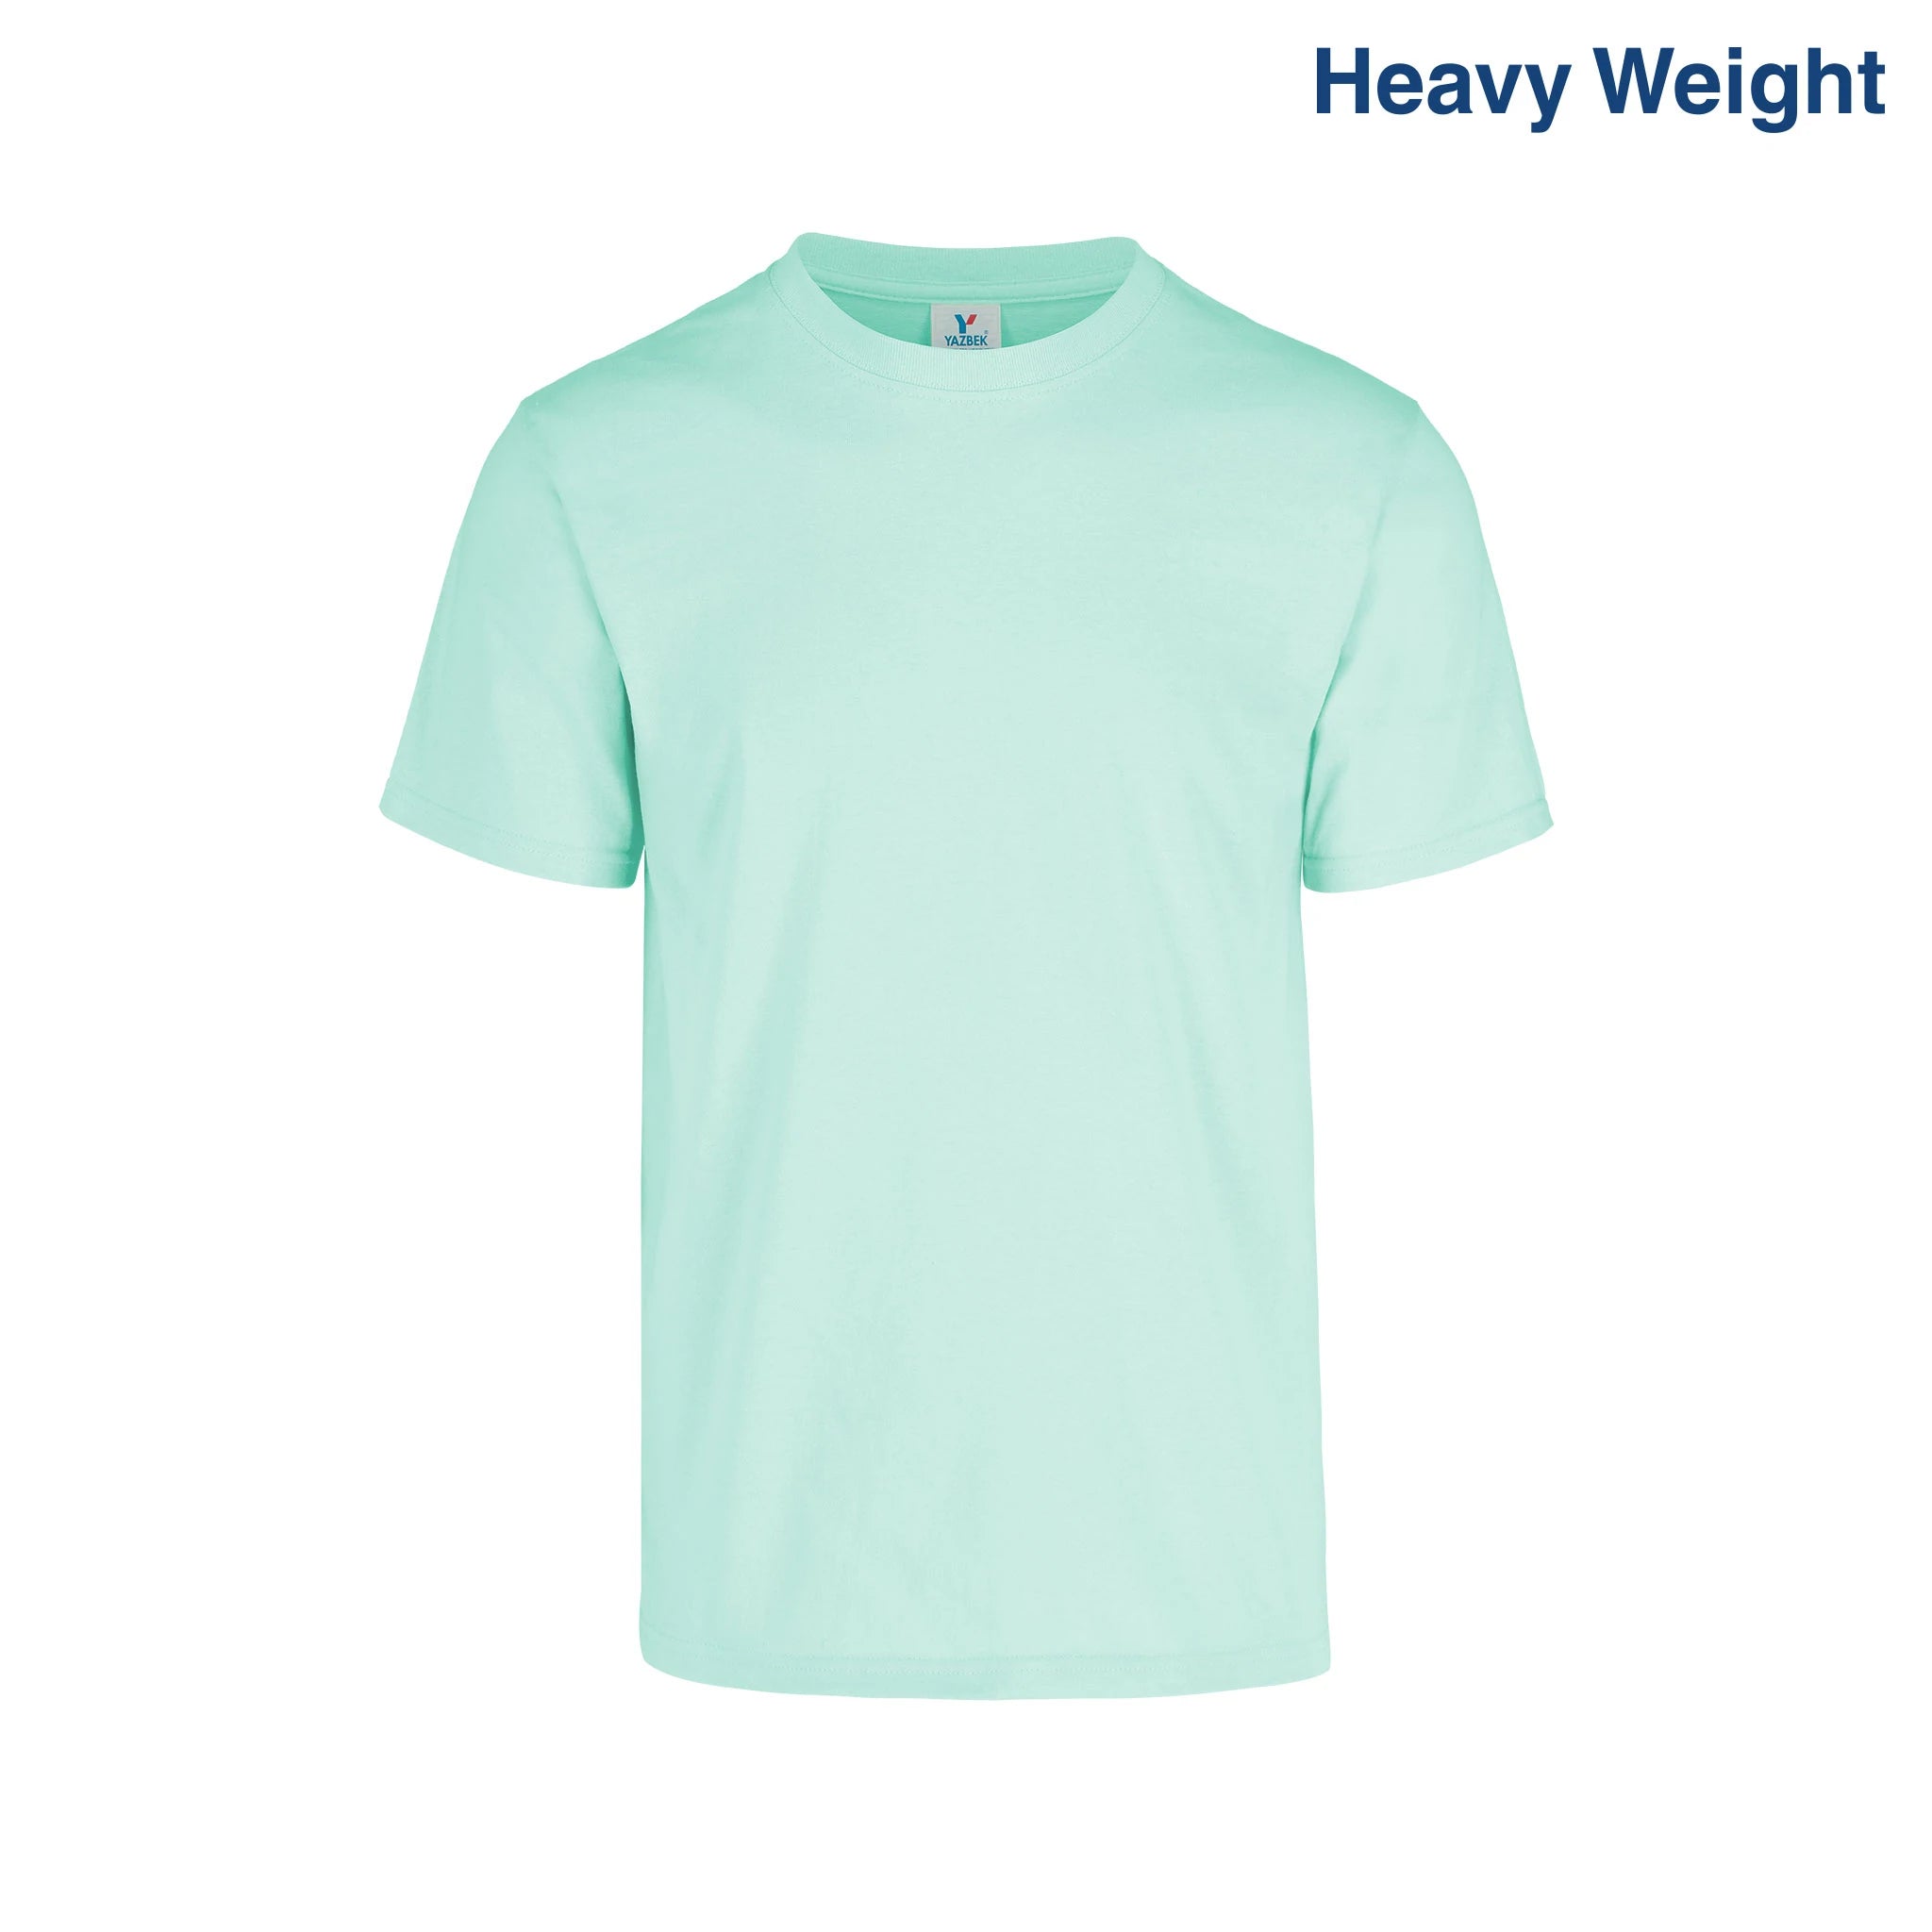 Aqua Heavy Weight Short Sleeve T-shirt by Yazbek 